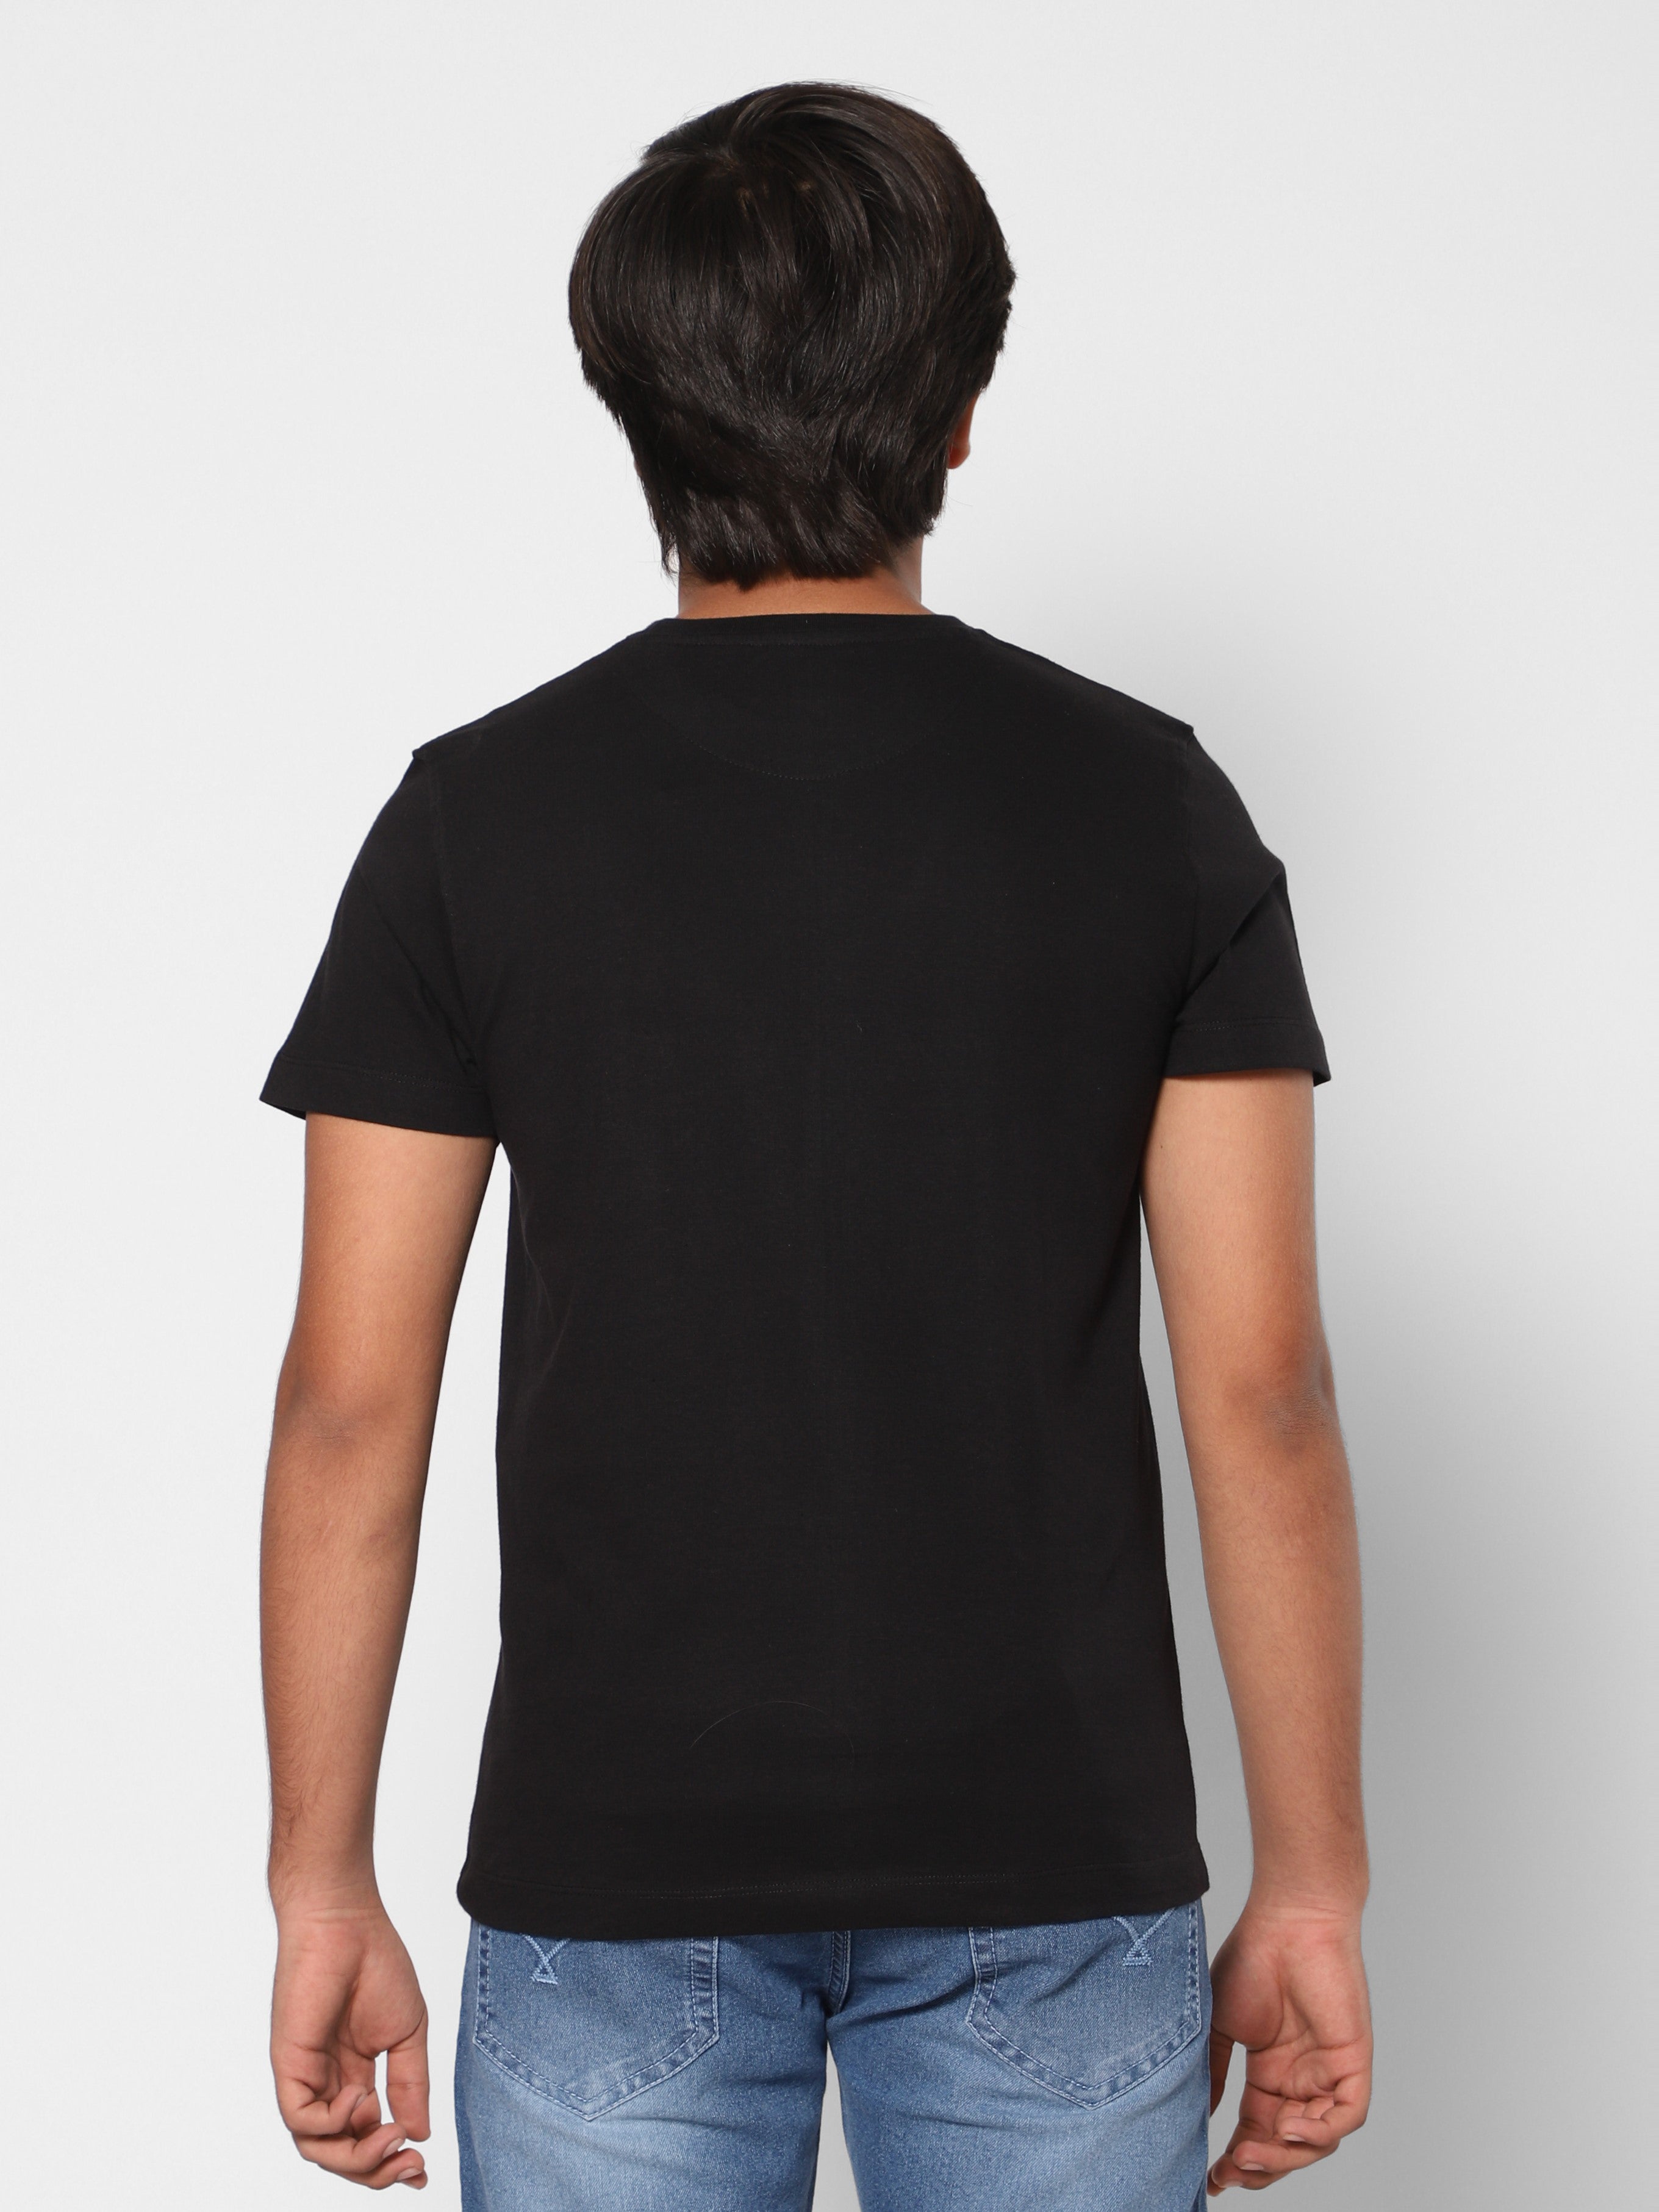 TeenTrums Regular Boys Graphic T-shirt Rose foil print- Black